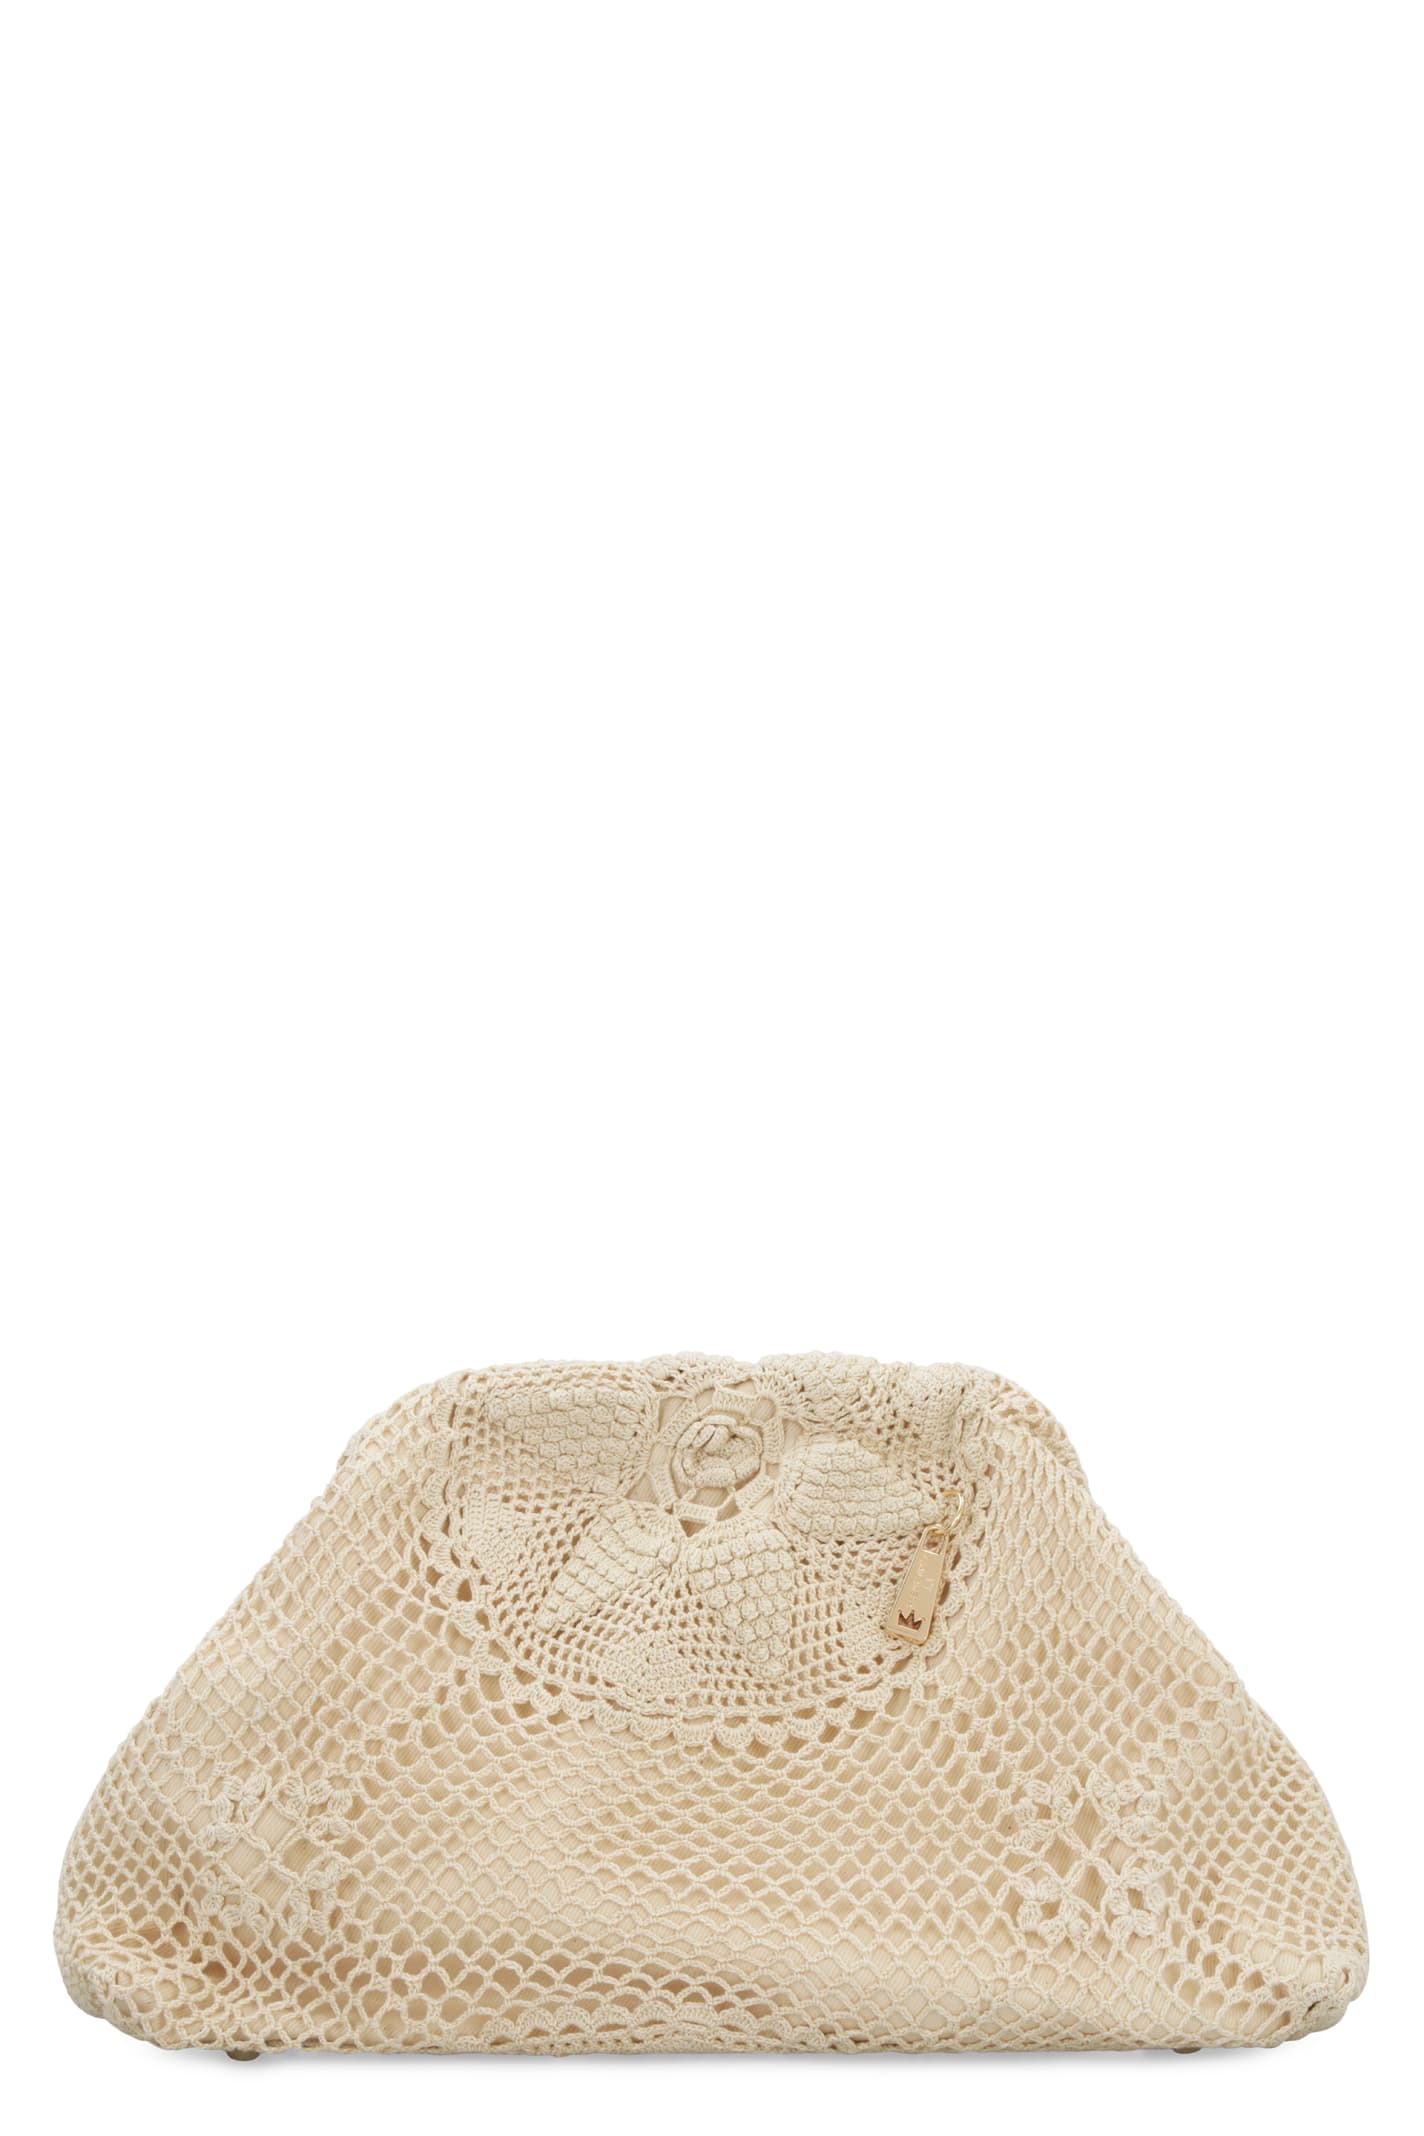 Lamilanesa Taormina Crochet Bag In Ecru